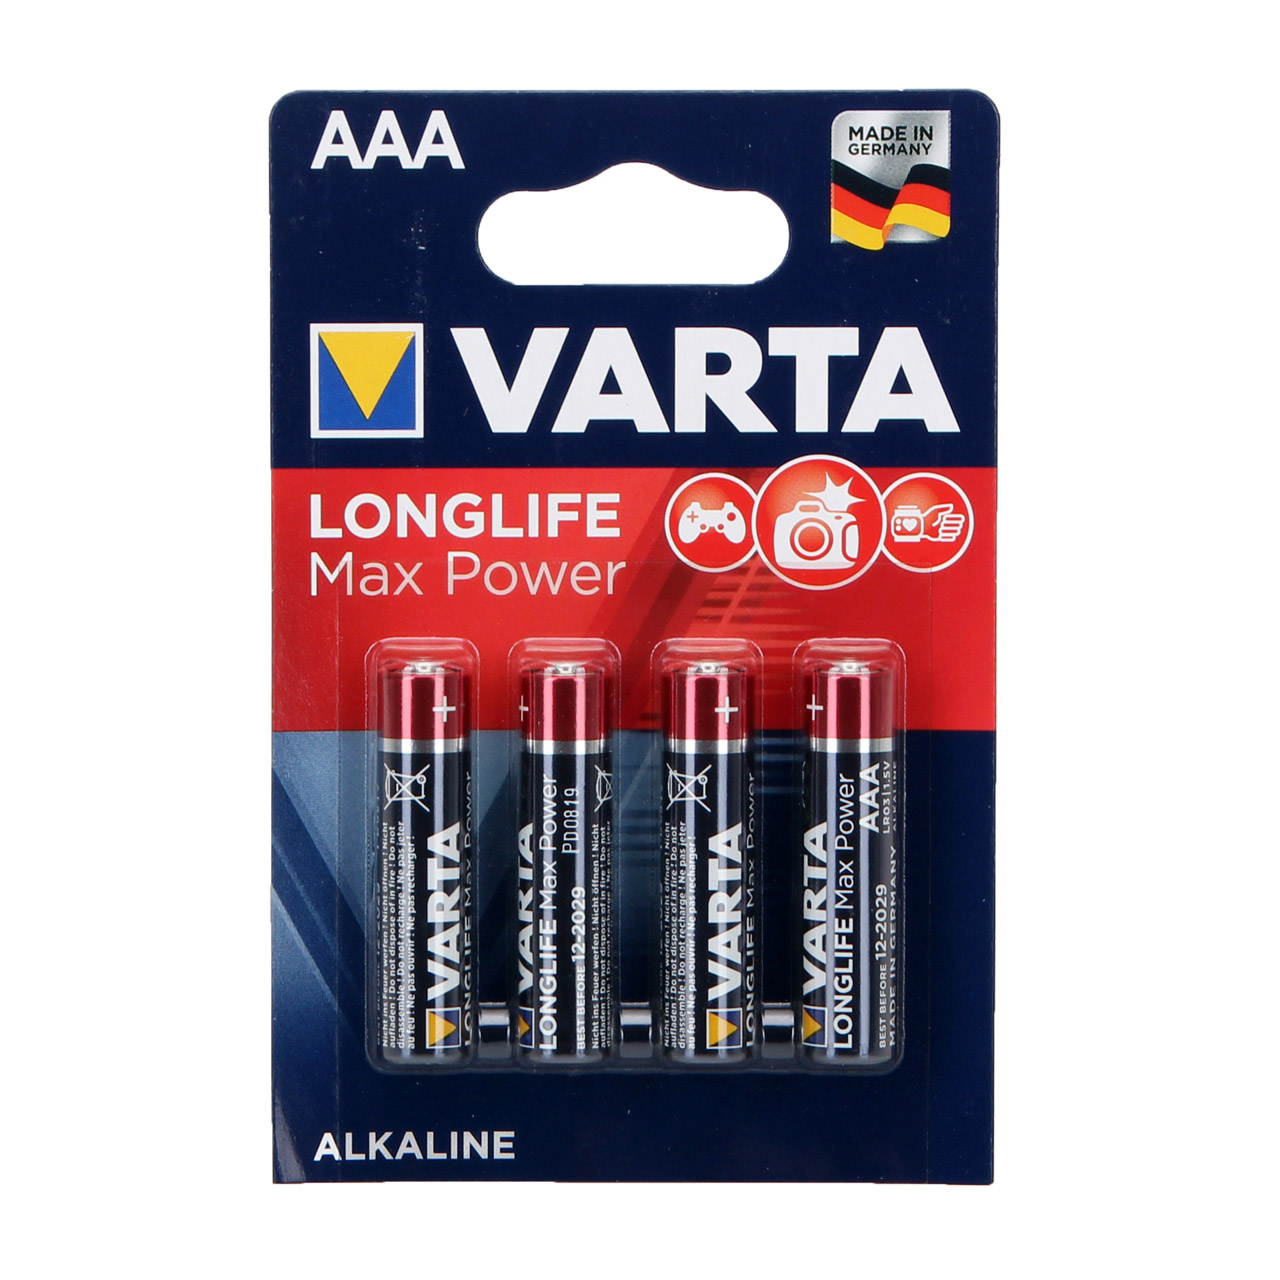 4x VARTA Batterie LONGLIFE MAX POWER Alkaline AAA LR03 Micro 1,5V